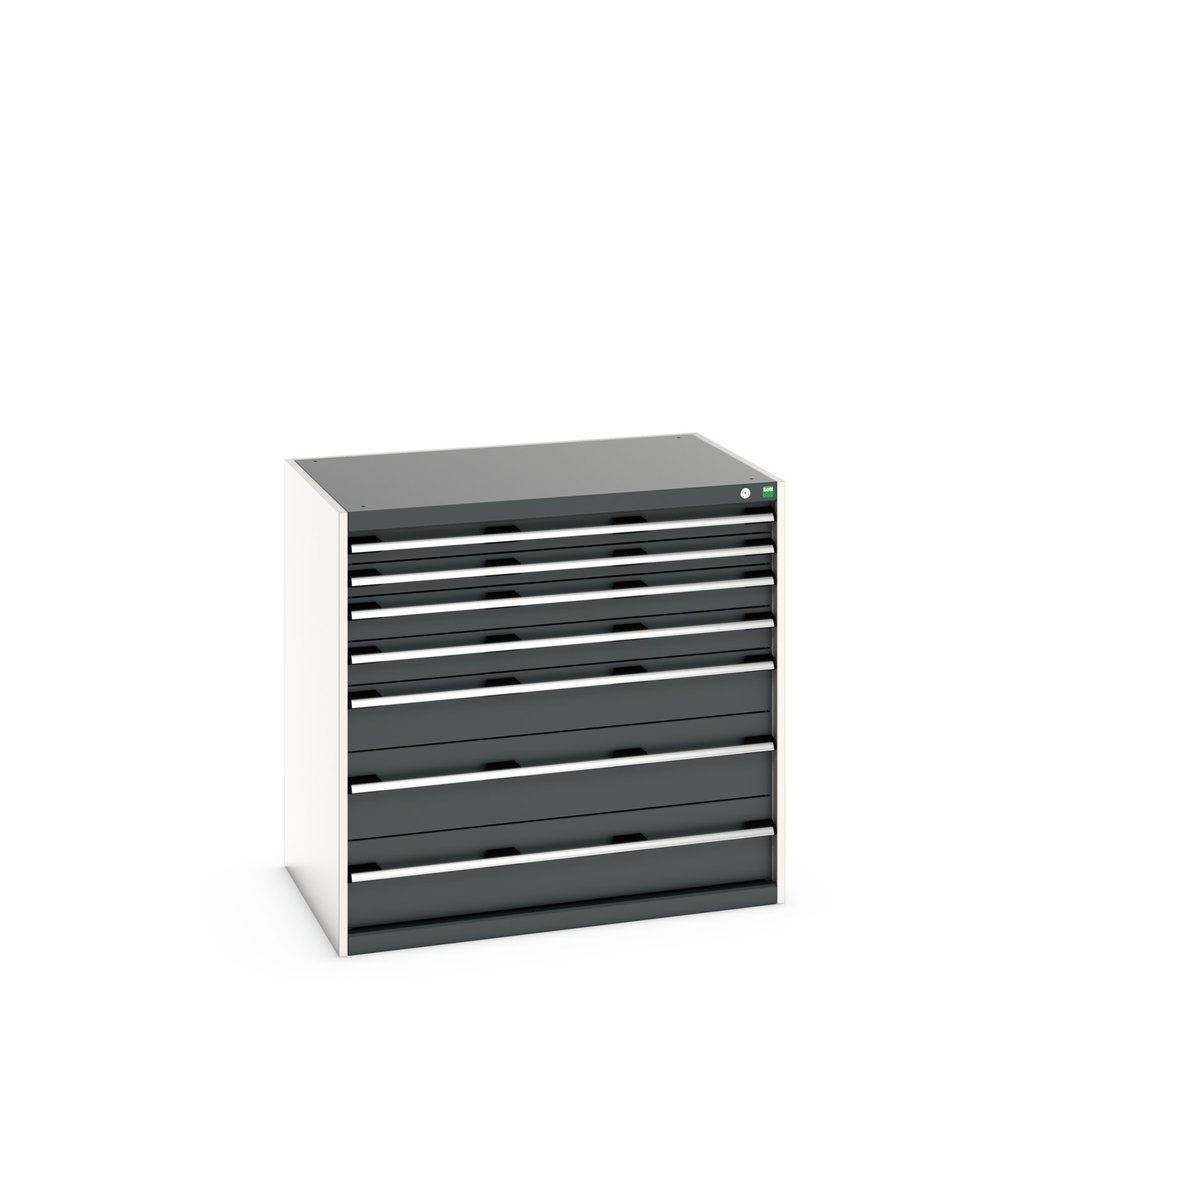 40029022. - cubio drawer cabinet